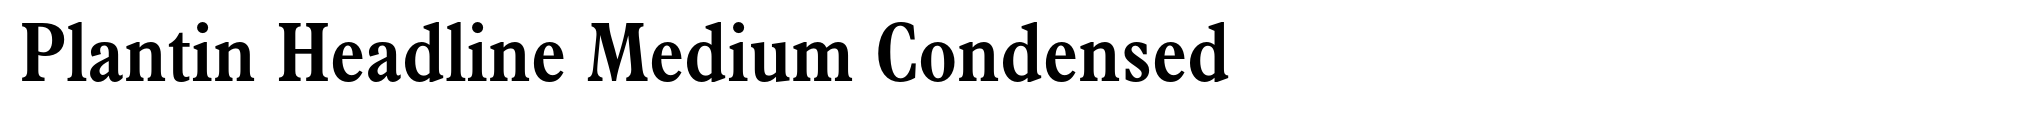 Plantin Headline Medium Condensed image